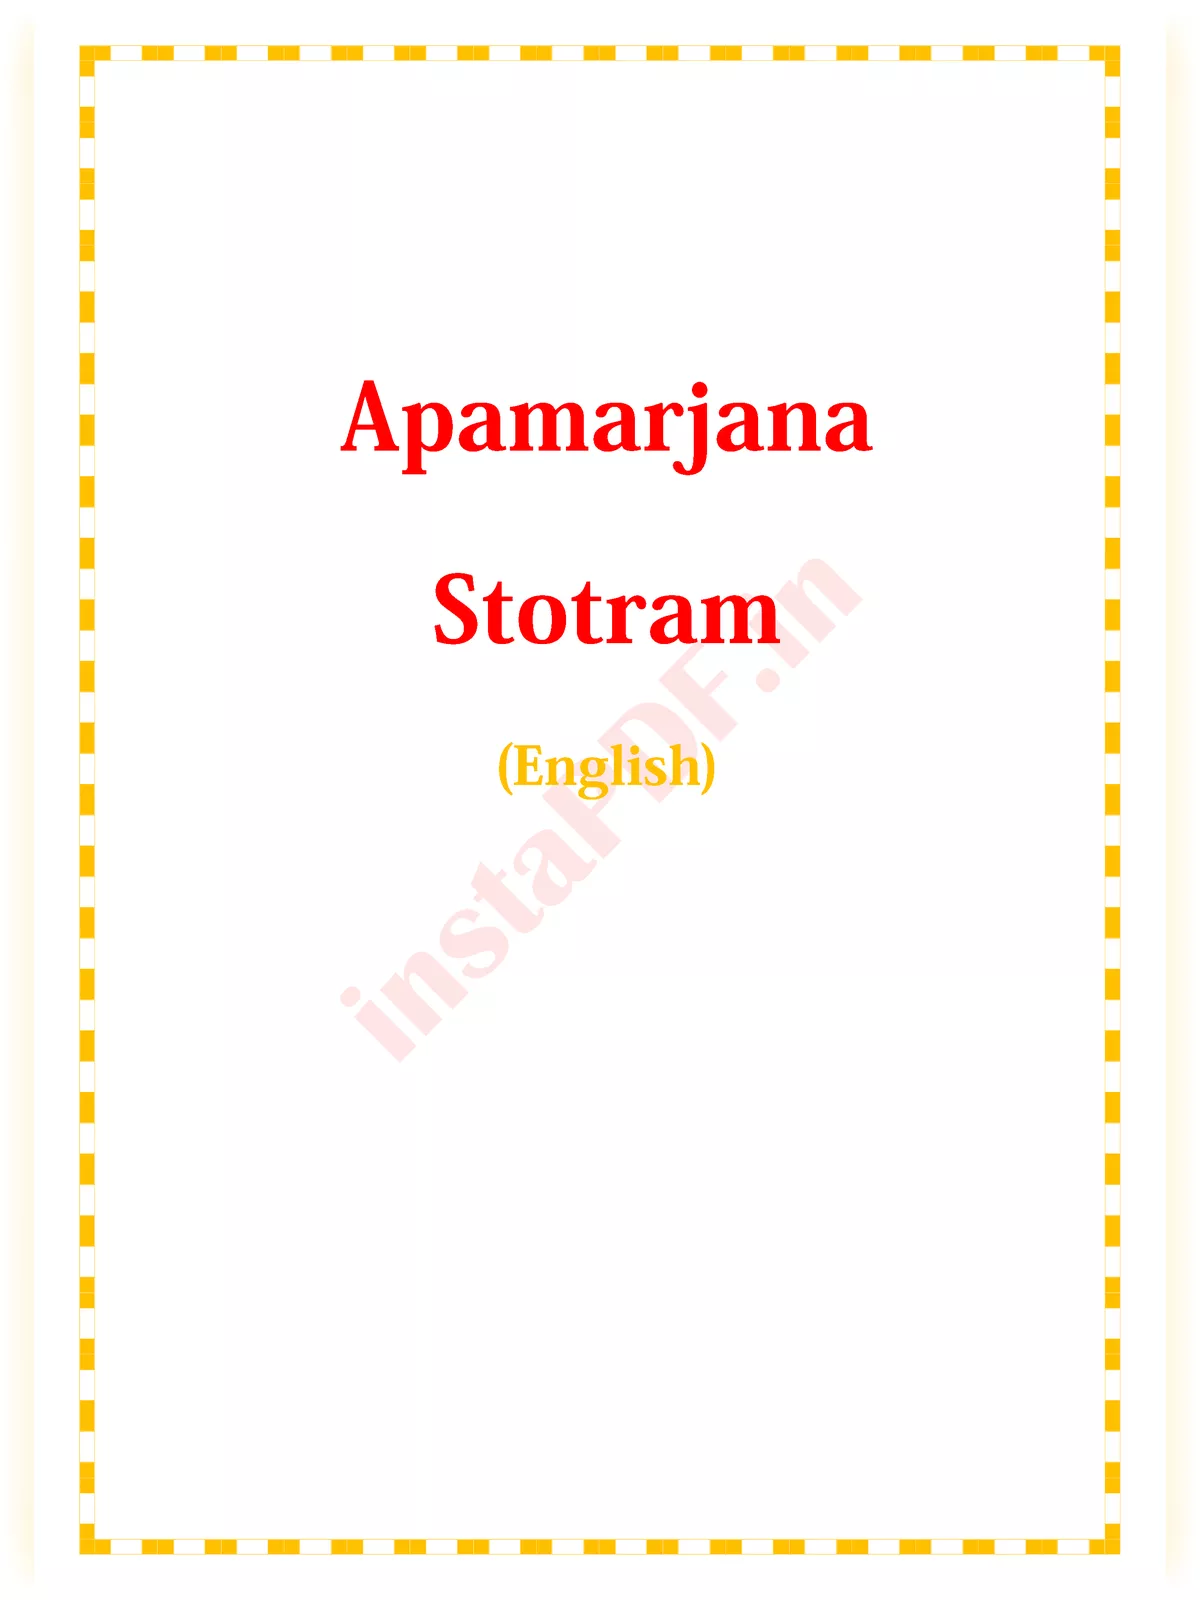 Apamarjana Stotram in English